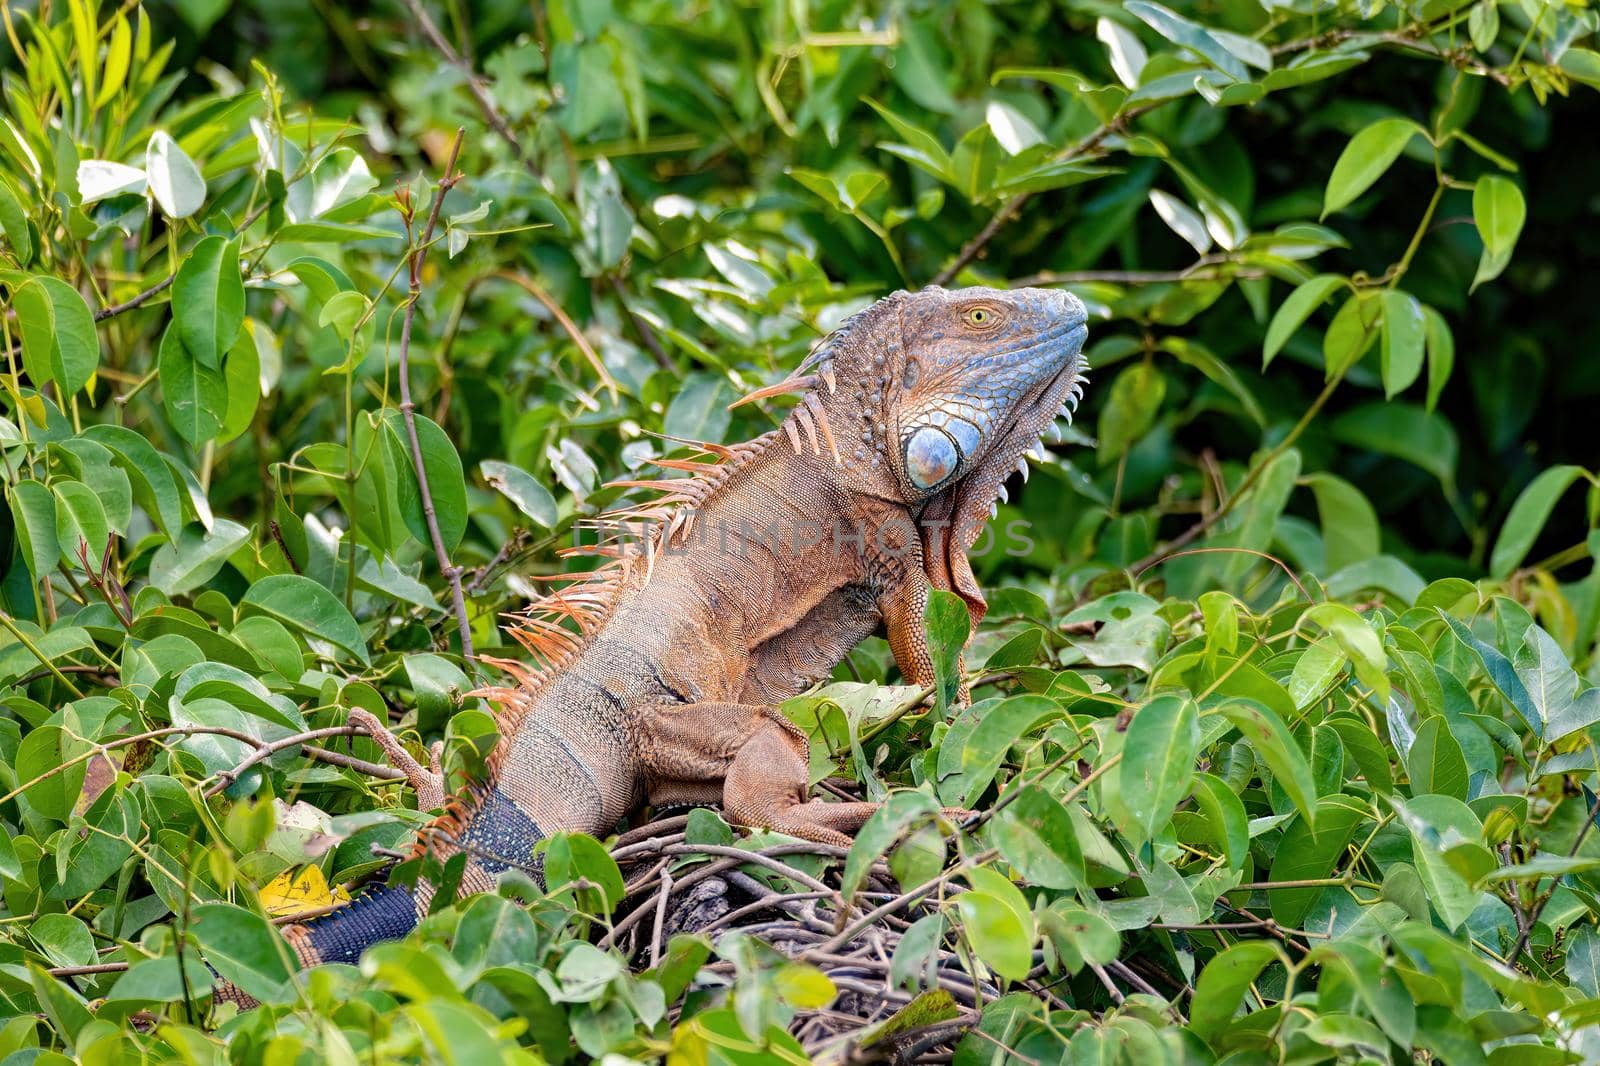 Green iguana (Iguana iguana), Rio Tempisque Costa Rica wildlife by artush